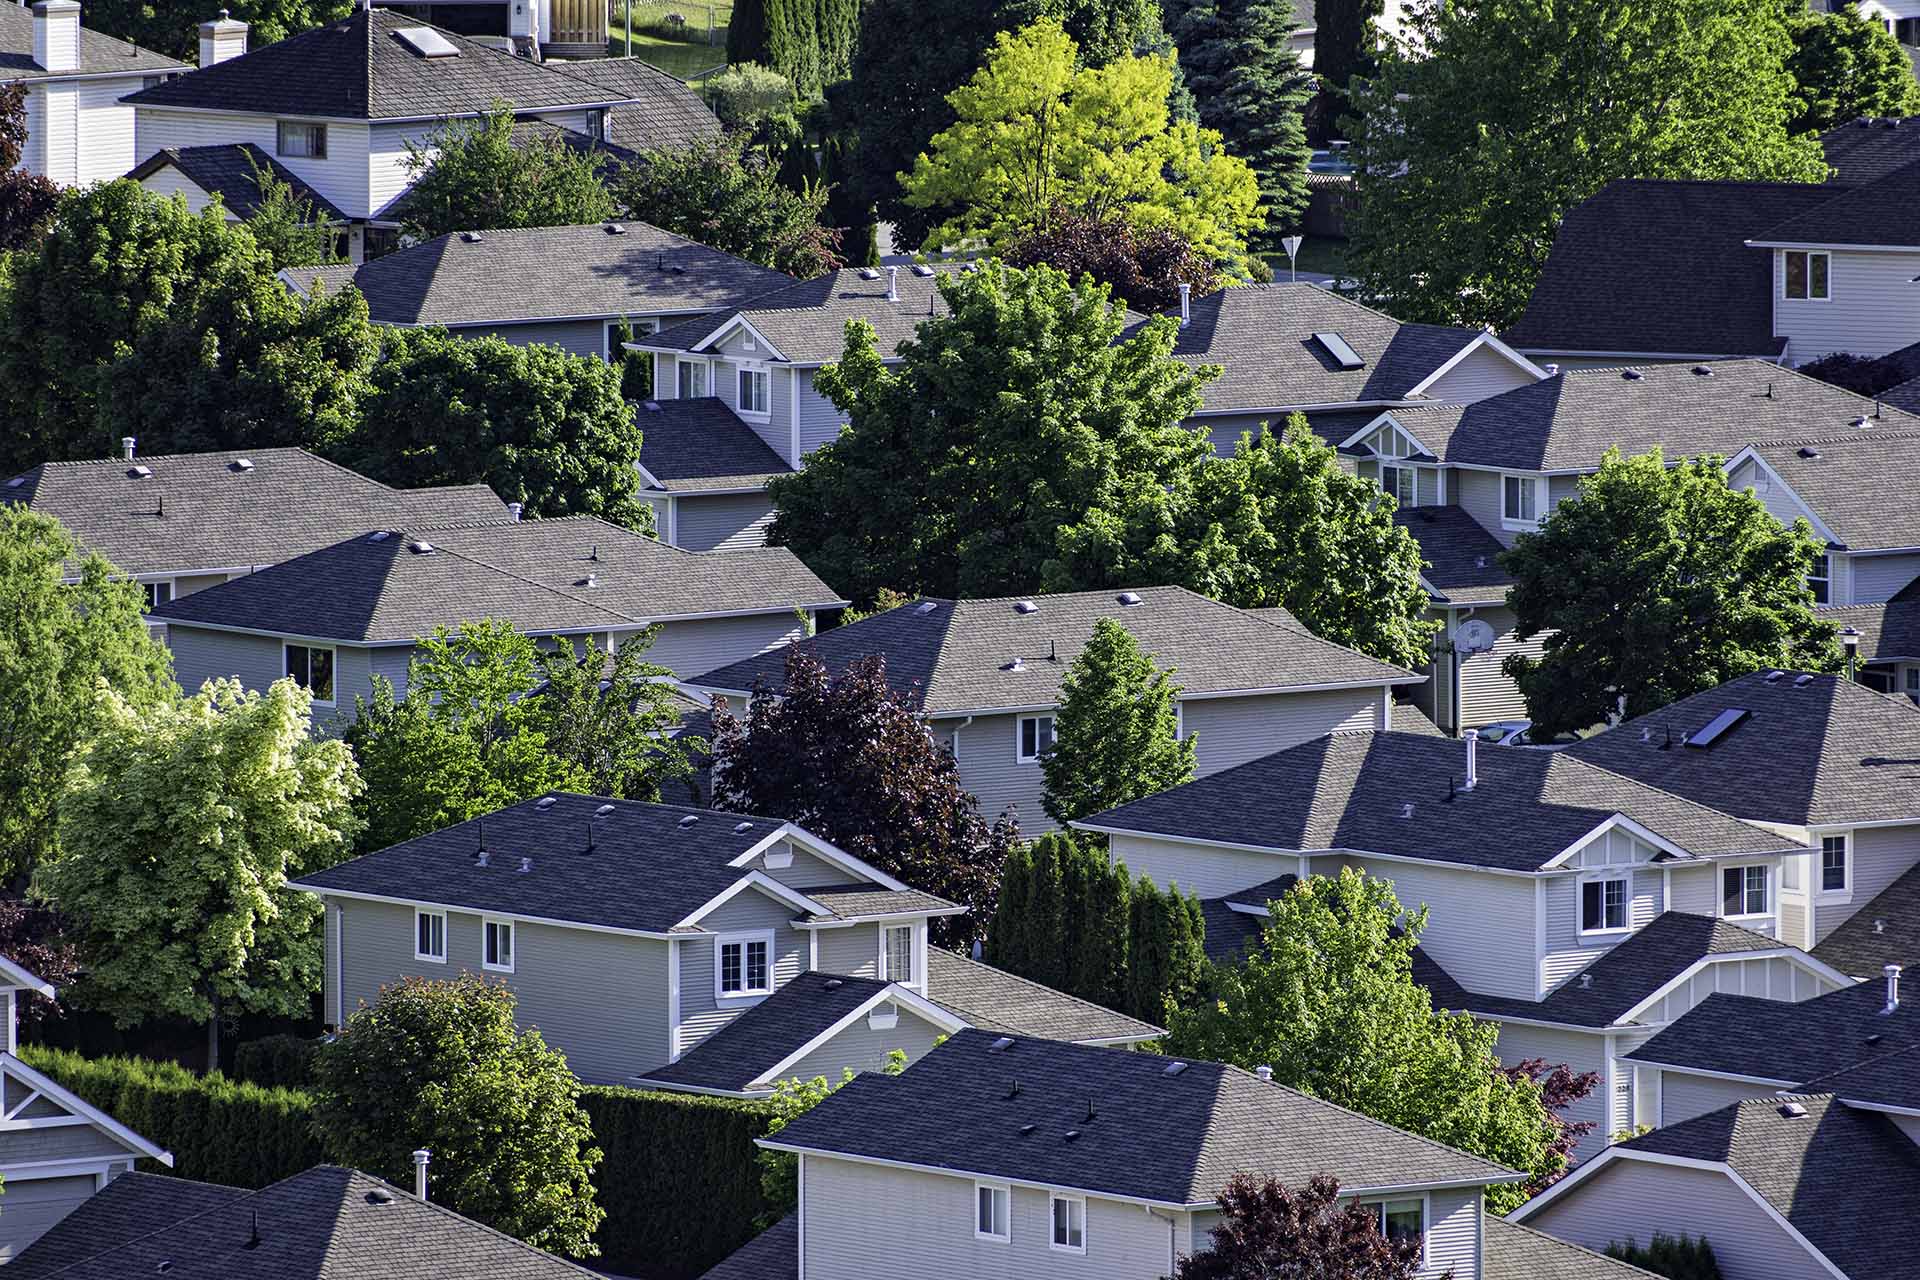 Housing costs broke records across the U.S.